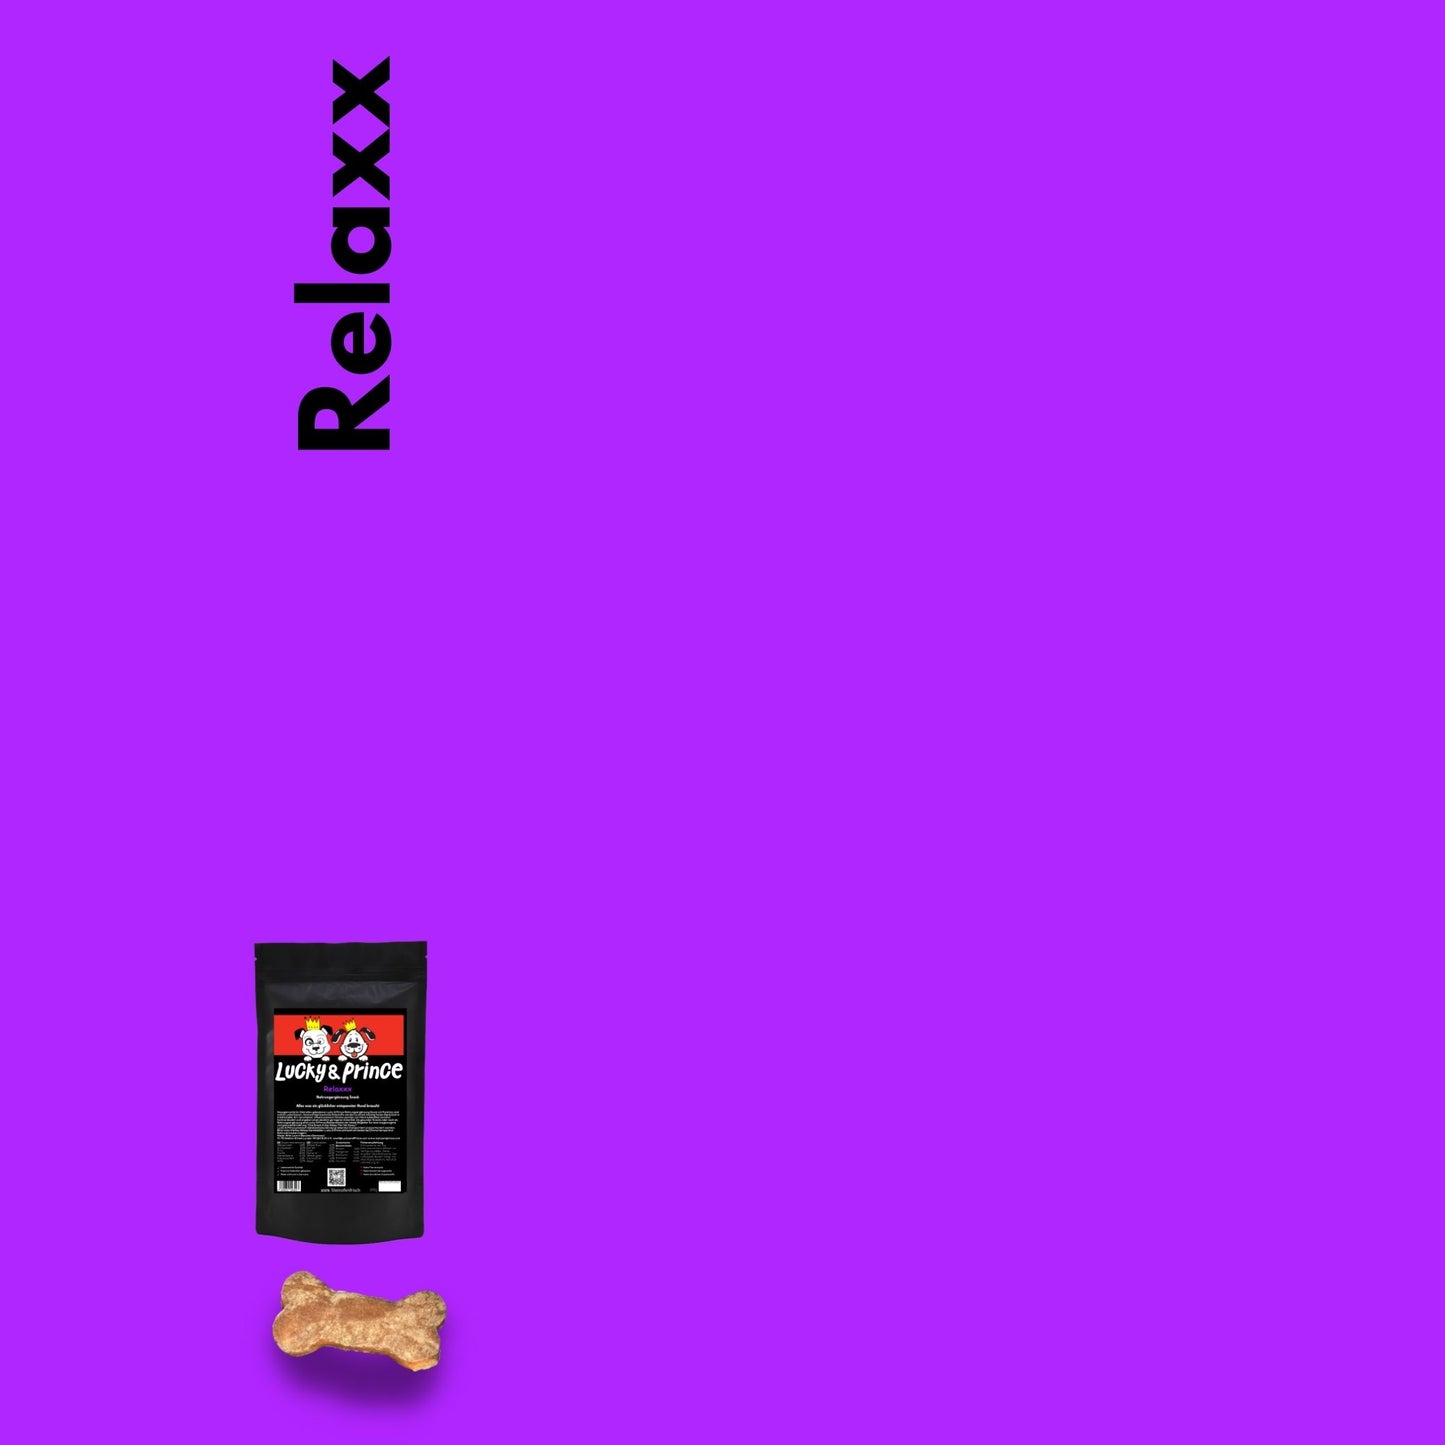 Relaxxx - Lucky & Prince 